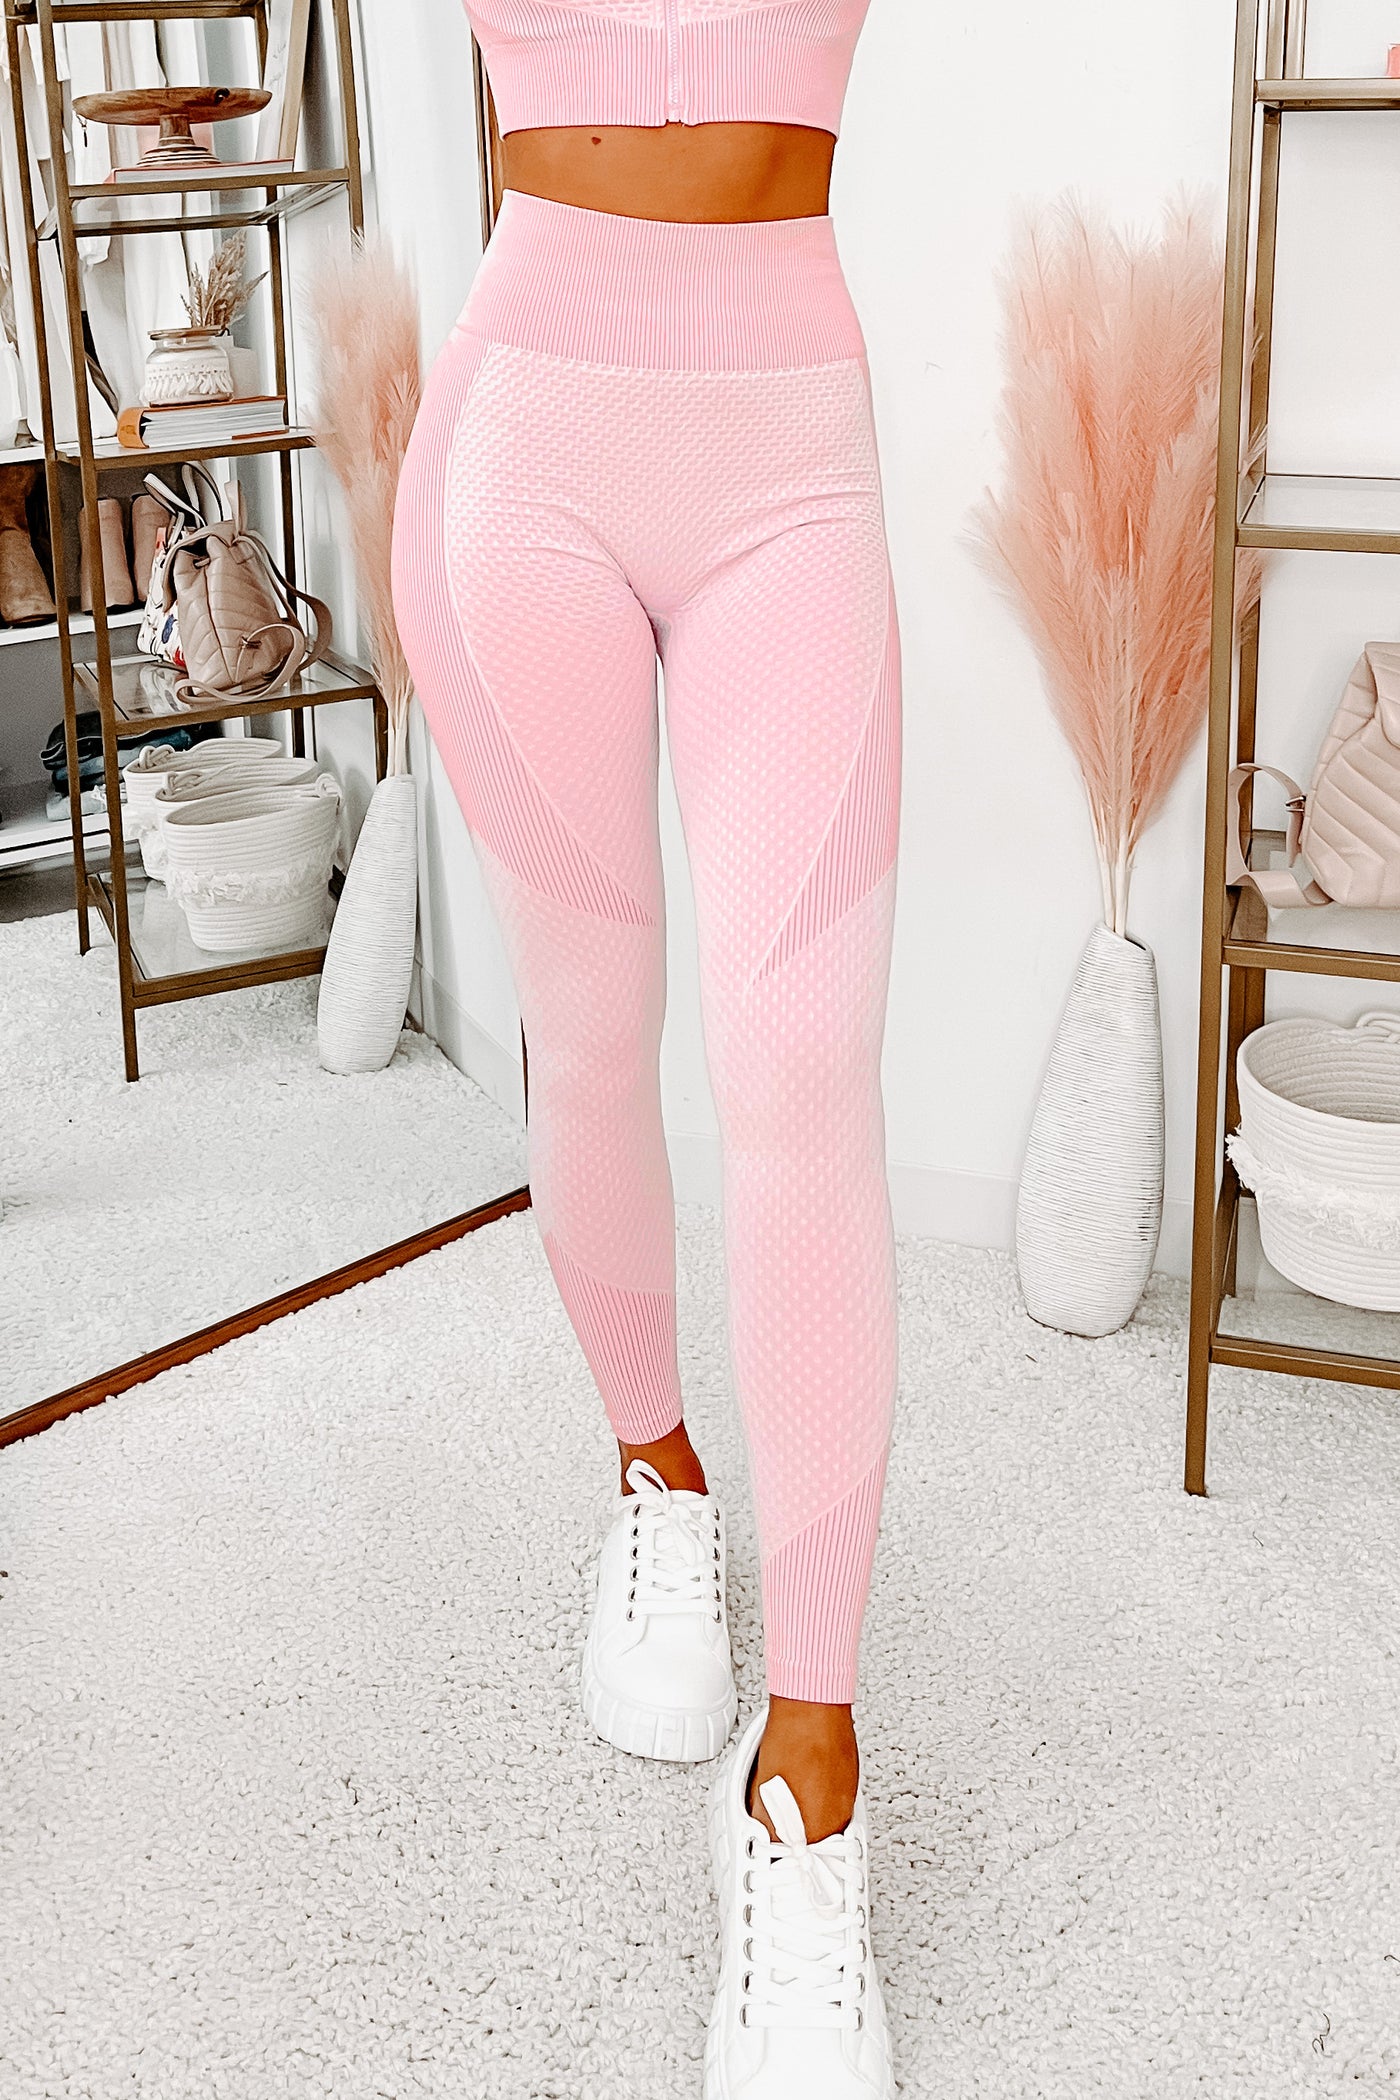 Cardio Cutie Honeycomb Two-Piece Activewear Set (Light Pink)